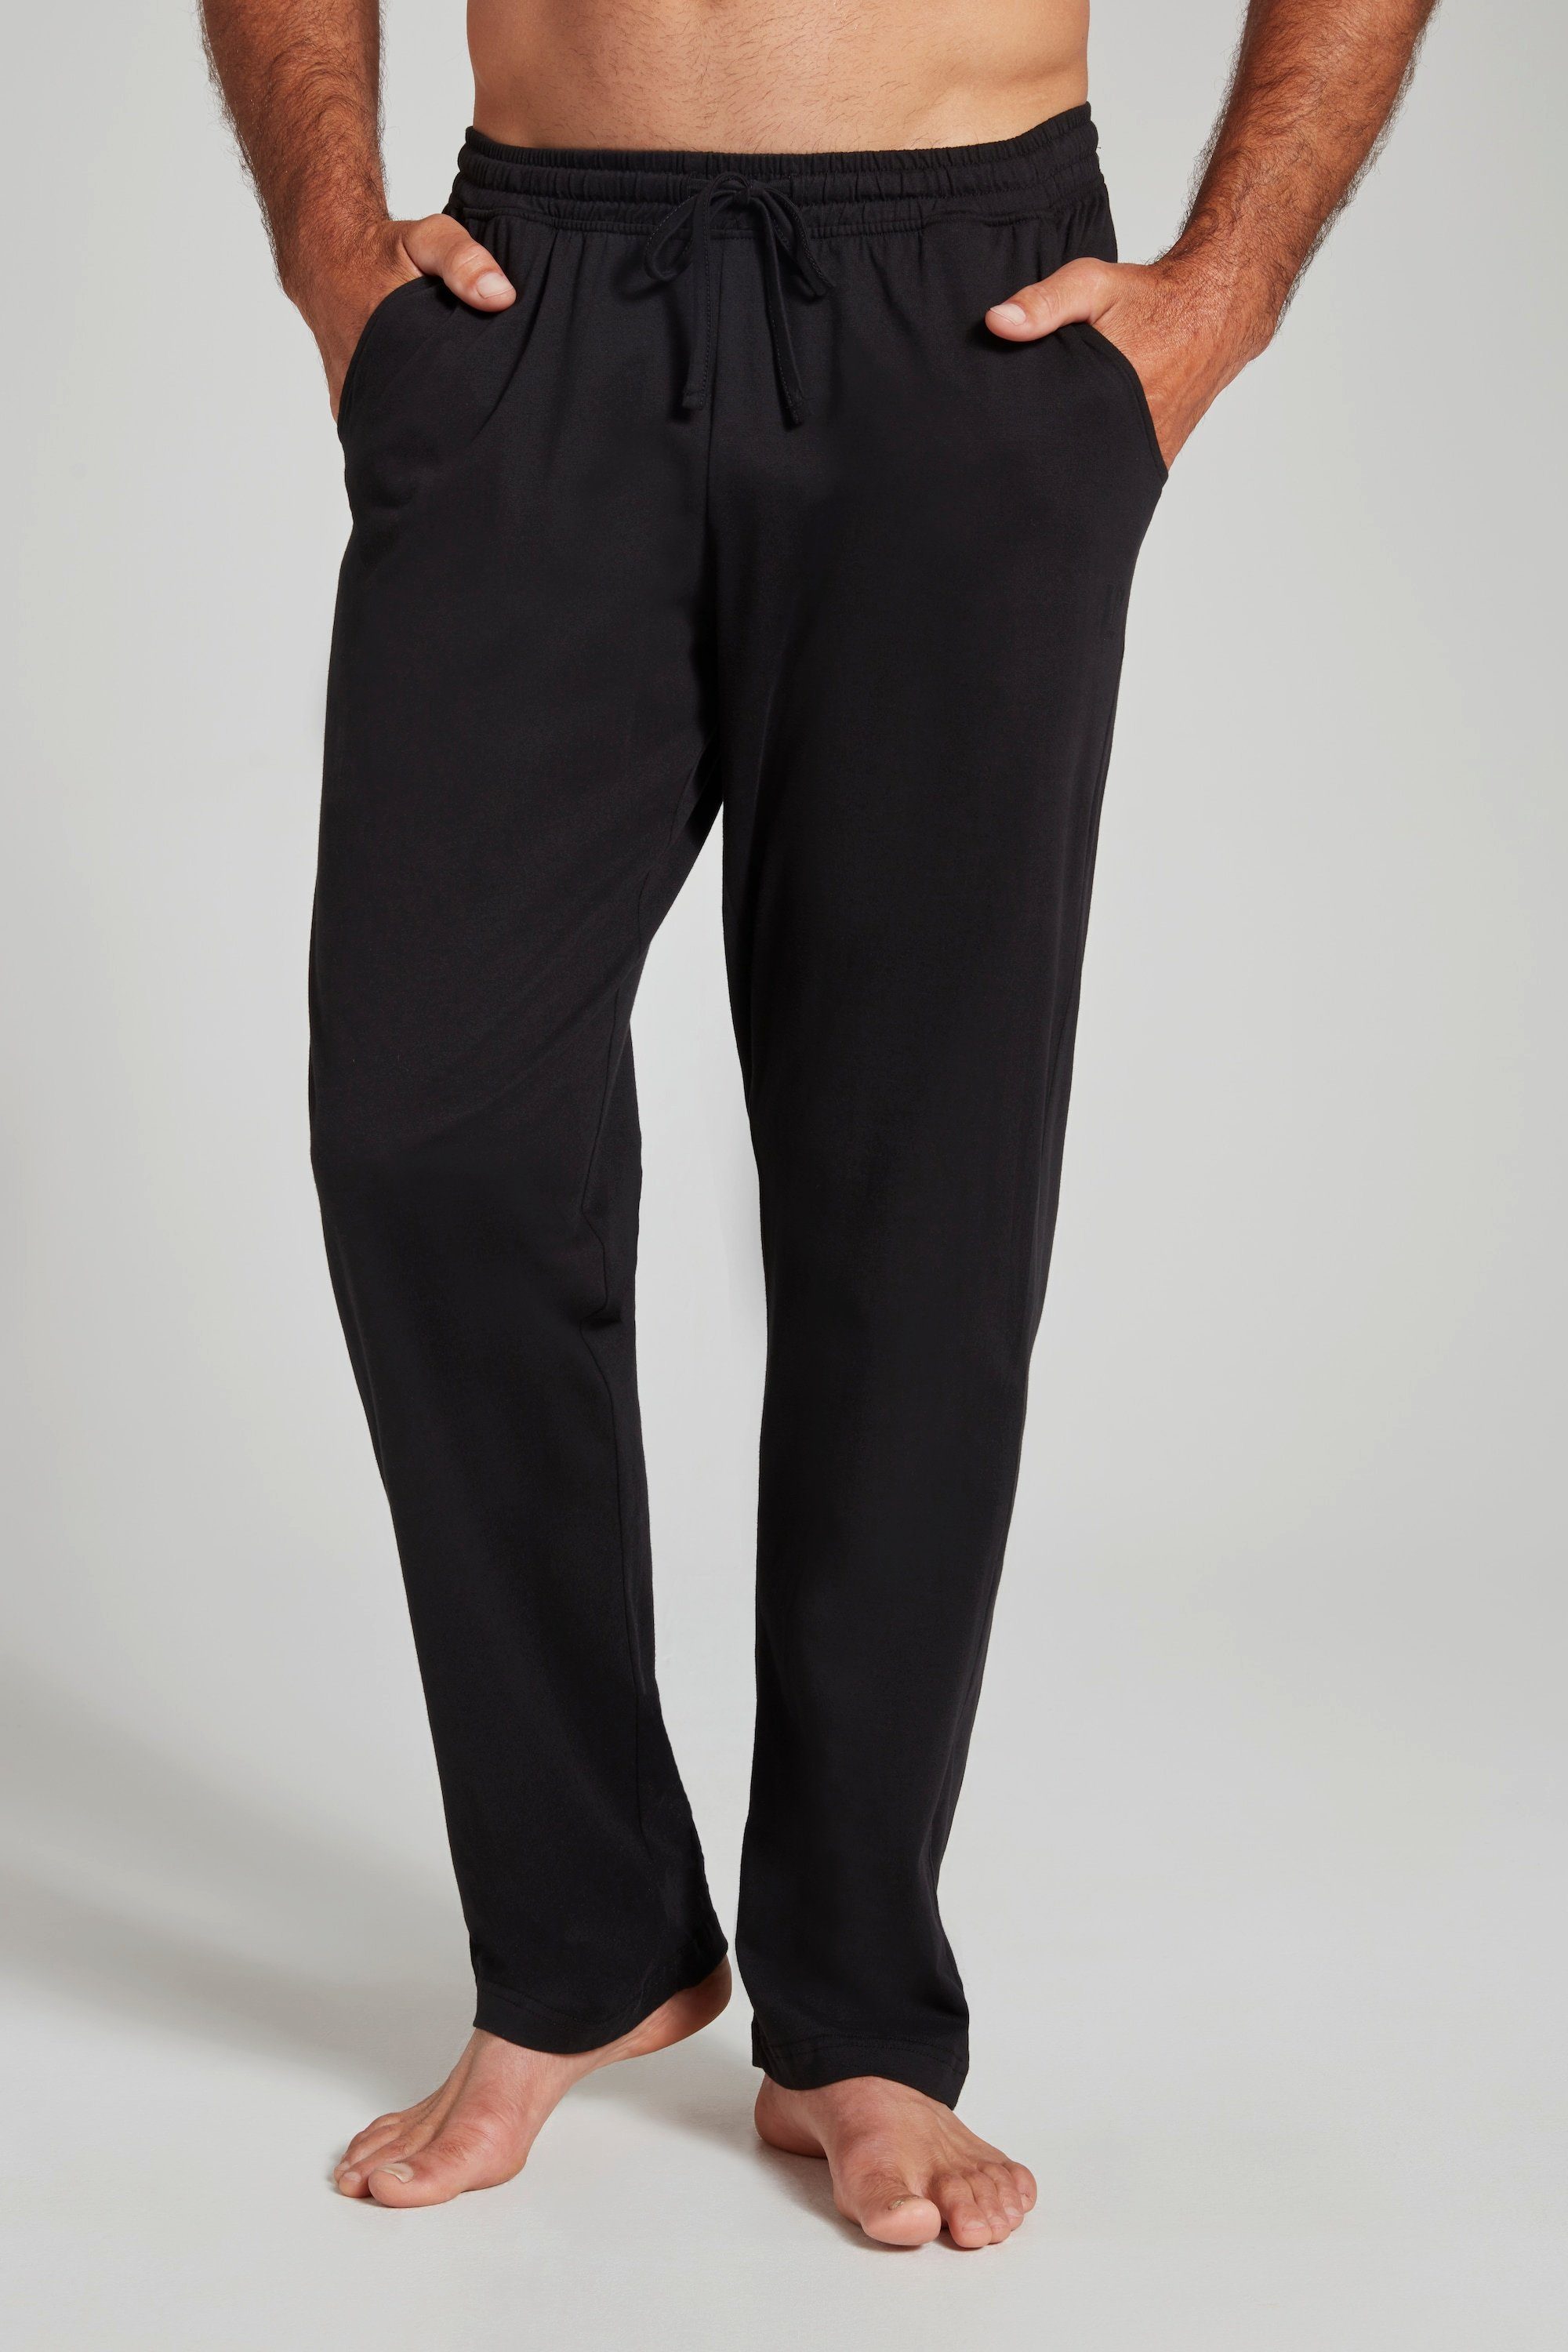 JP1880 Schlafanzug Schlafanzug-Hose Homewear lange Form Elastikbund schwarz | Pyjamas